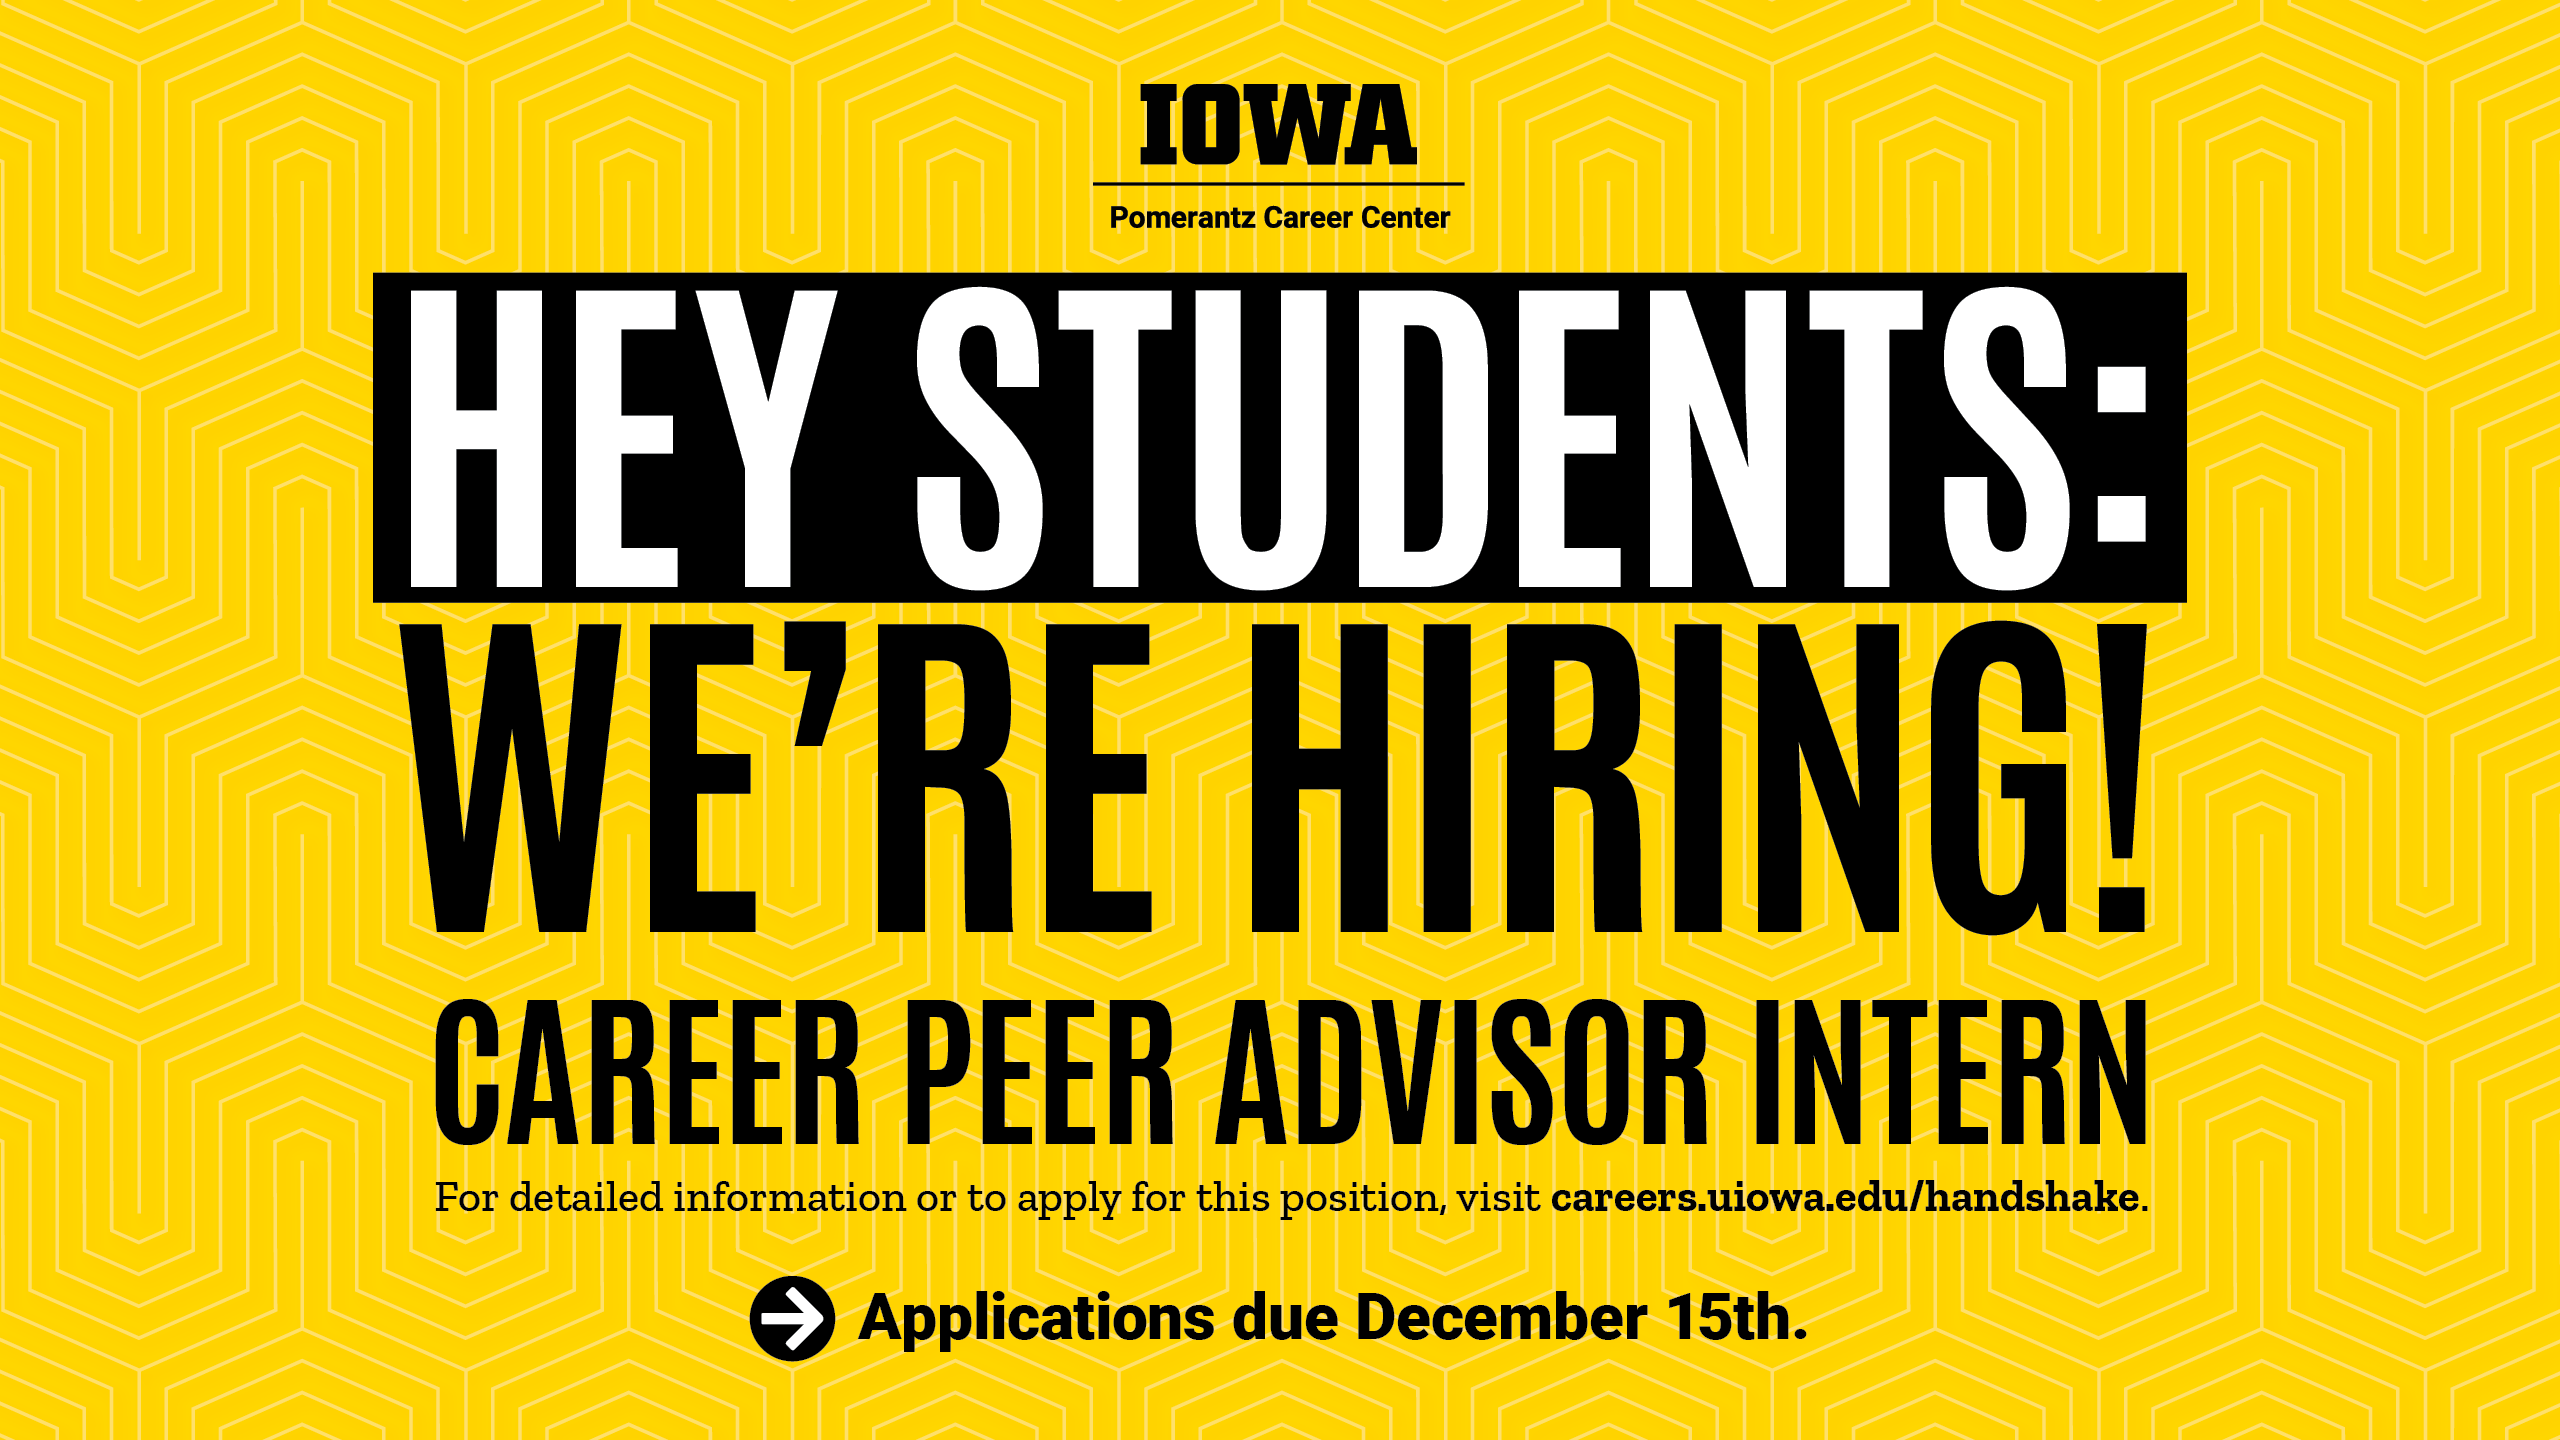 We're hiring a Career Peer Advisor Intern. Applications due December 15th.